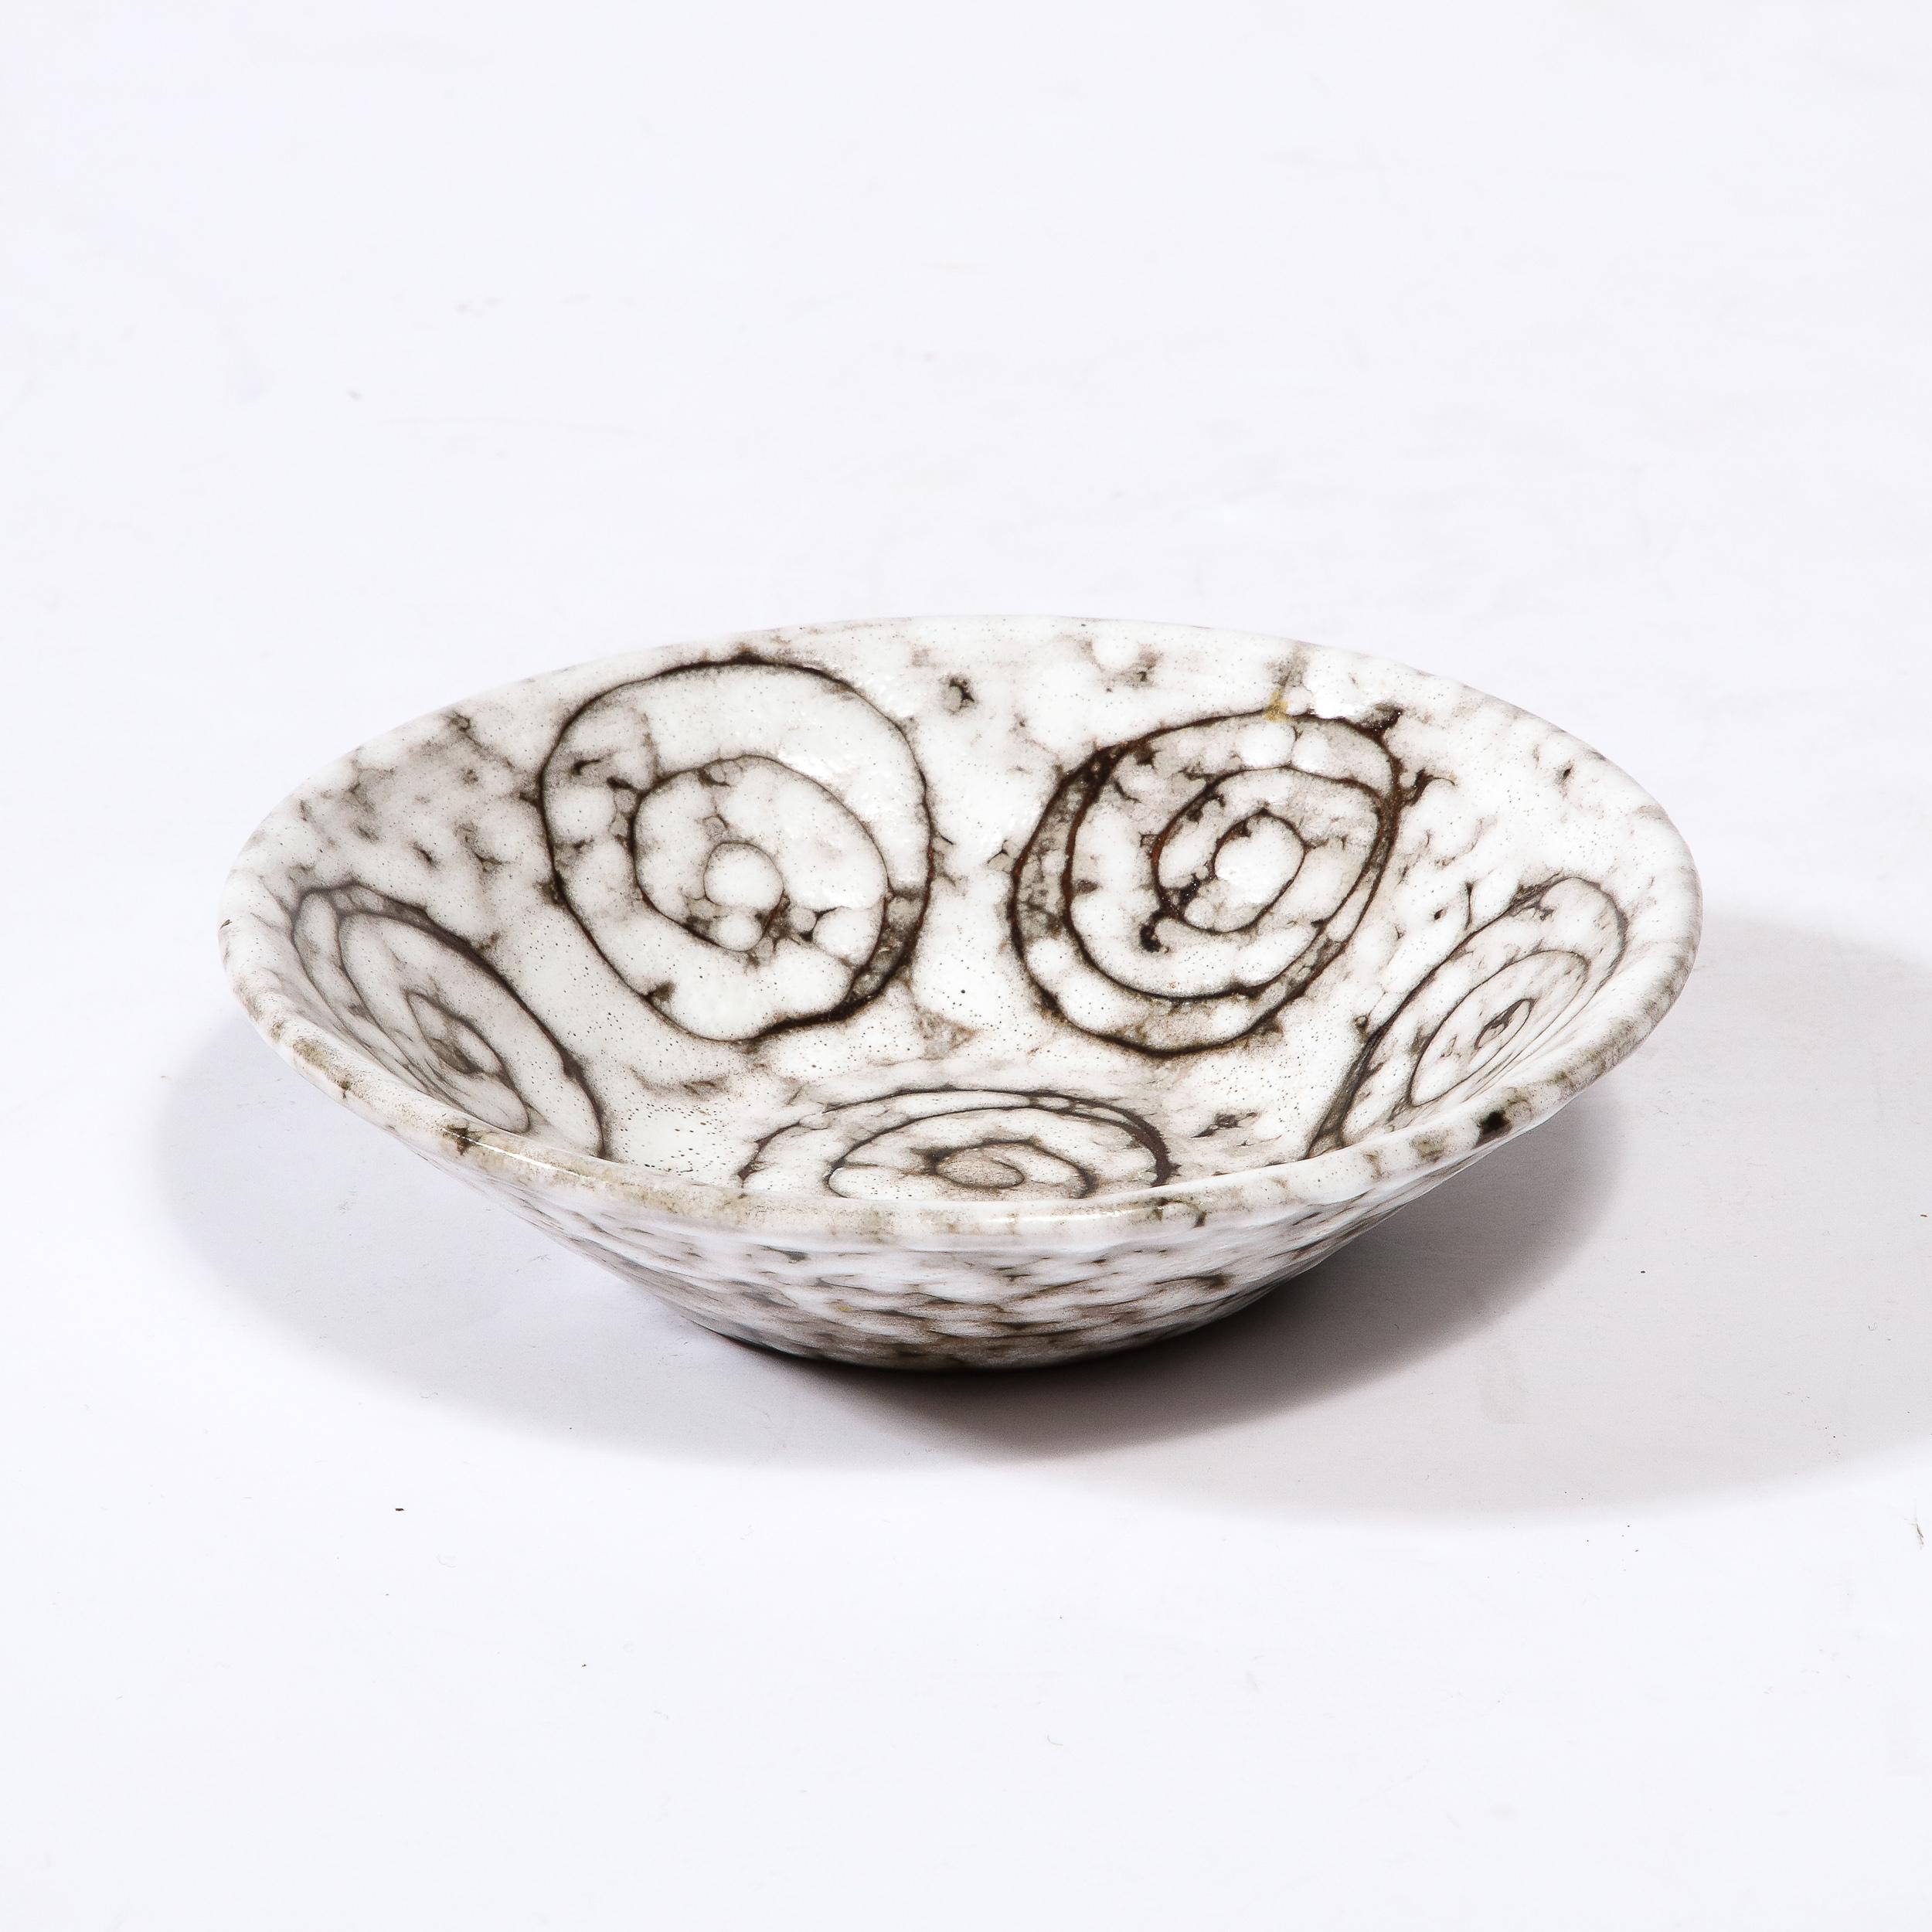 Glazed Mid-Century Modernist White and Earth Toned Ceramic Dish W/ Seven Spirals